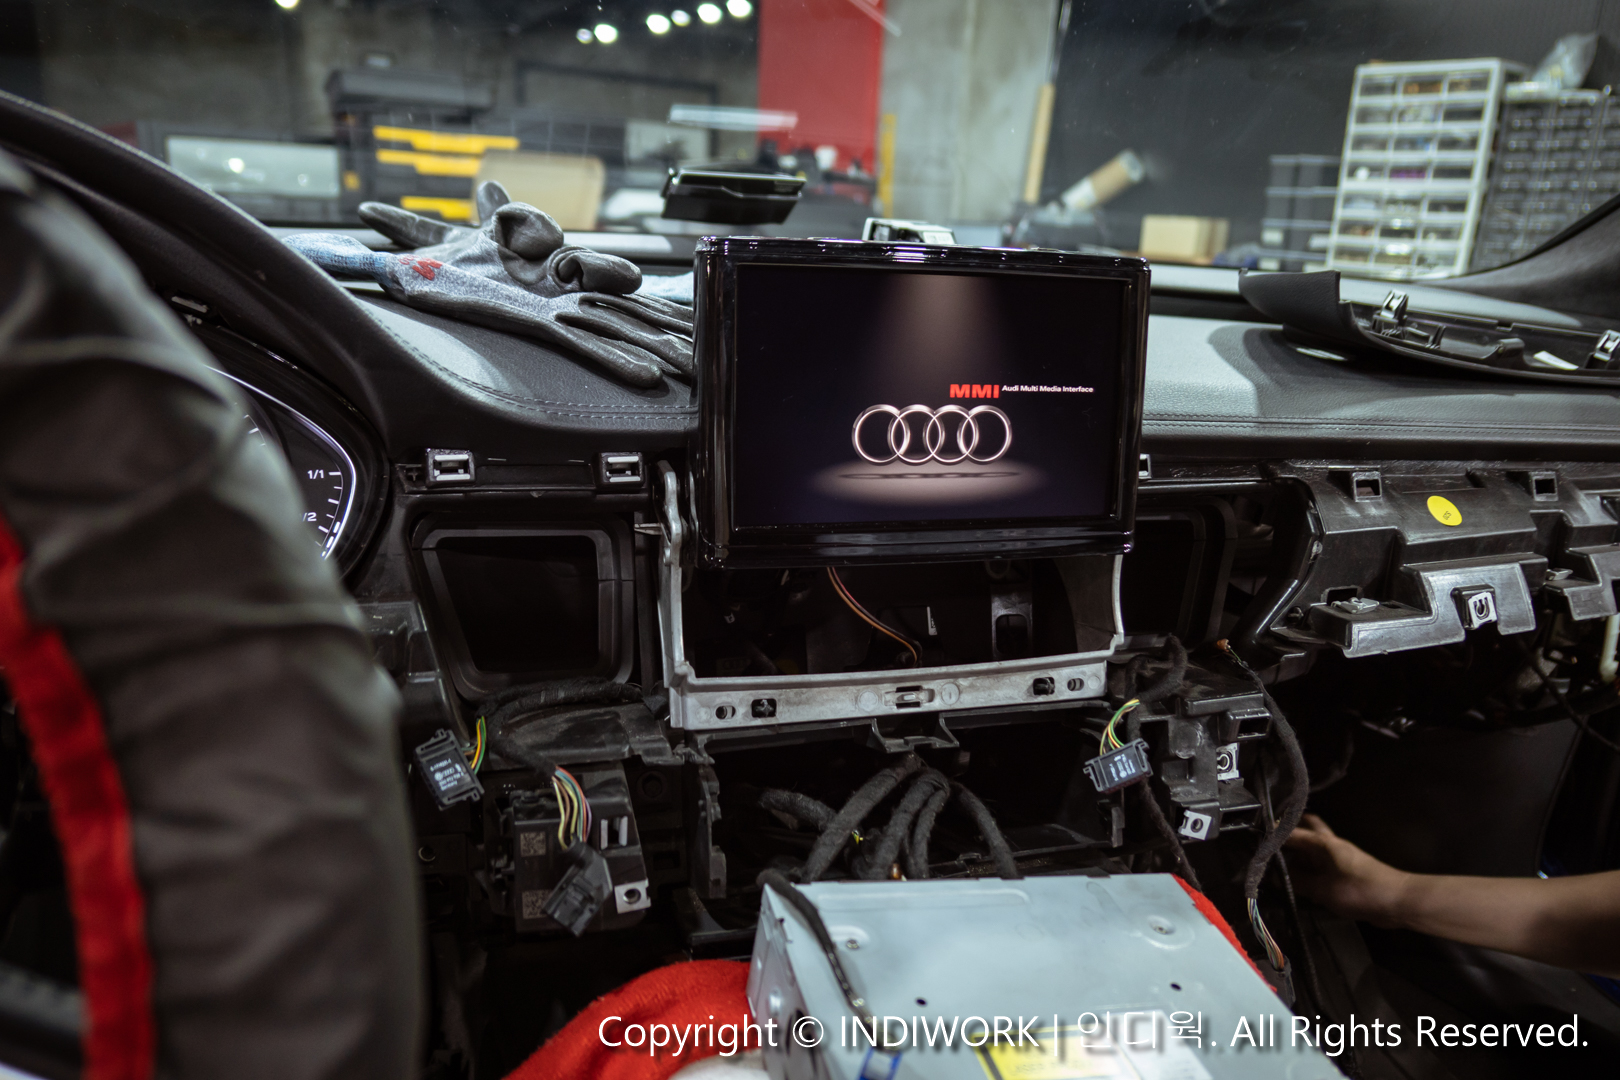 2012 Audi A8 D4 Main screen